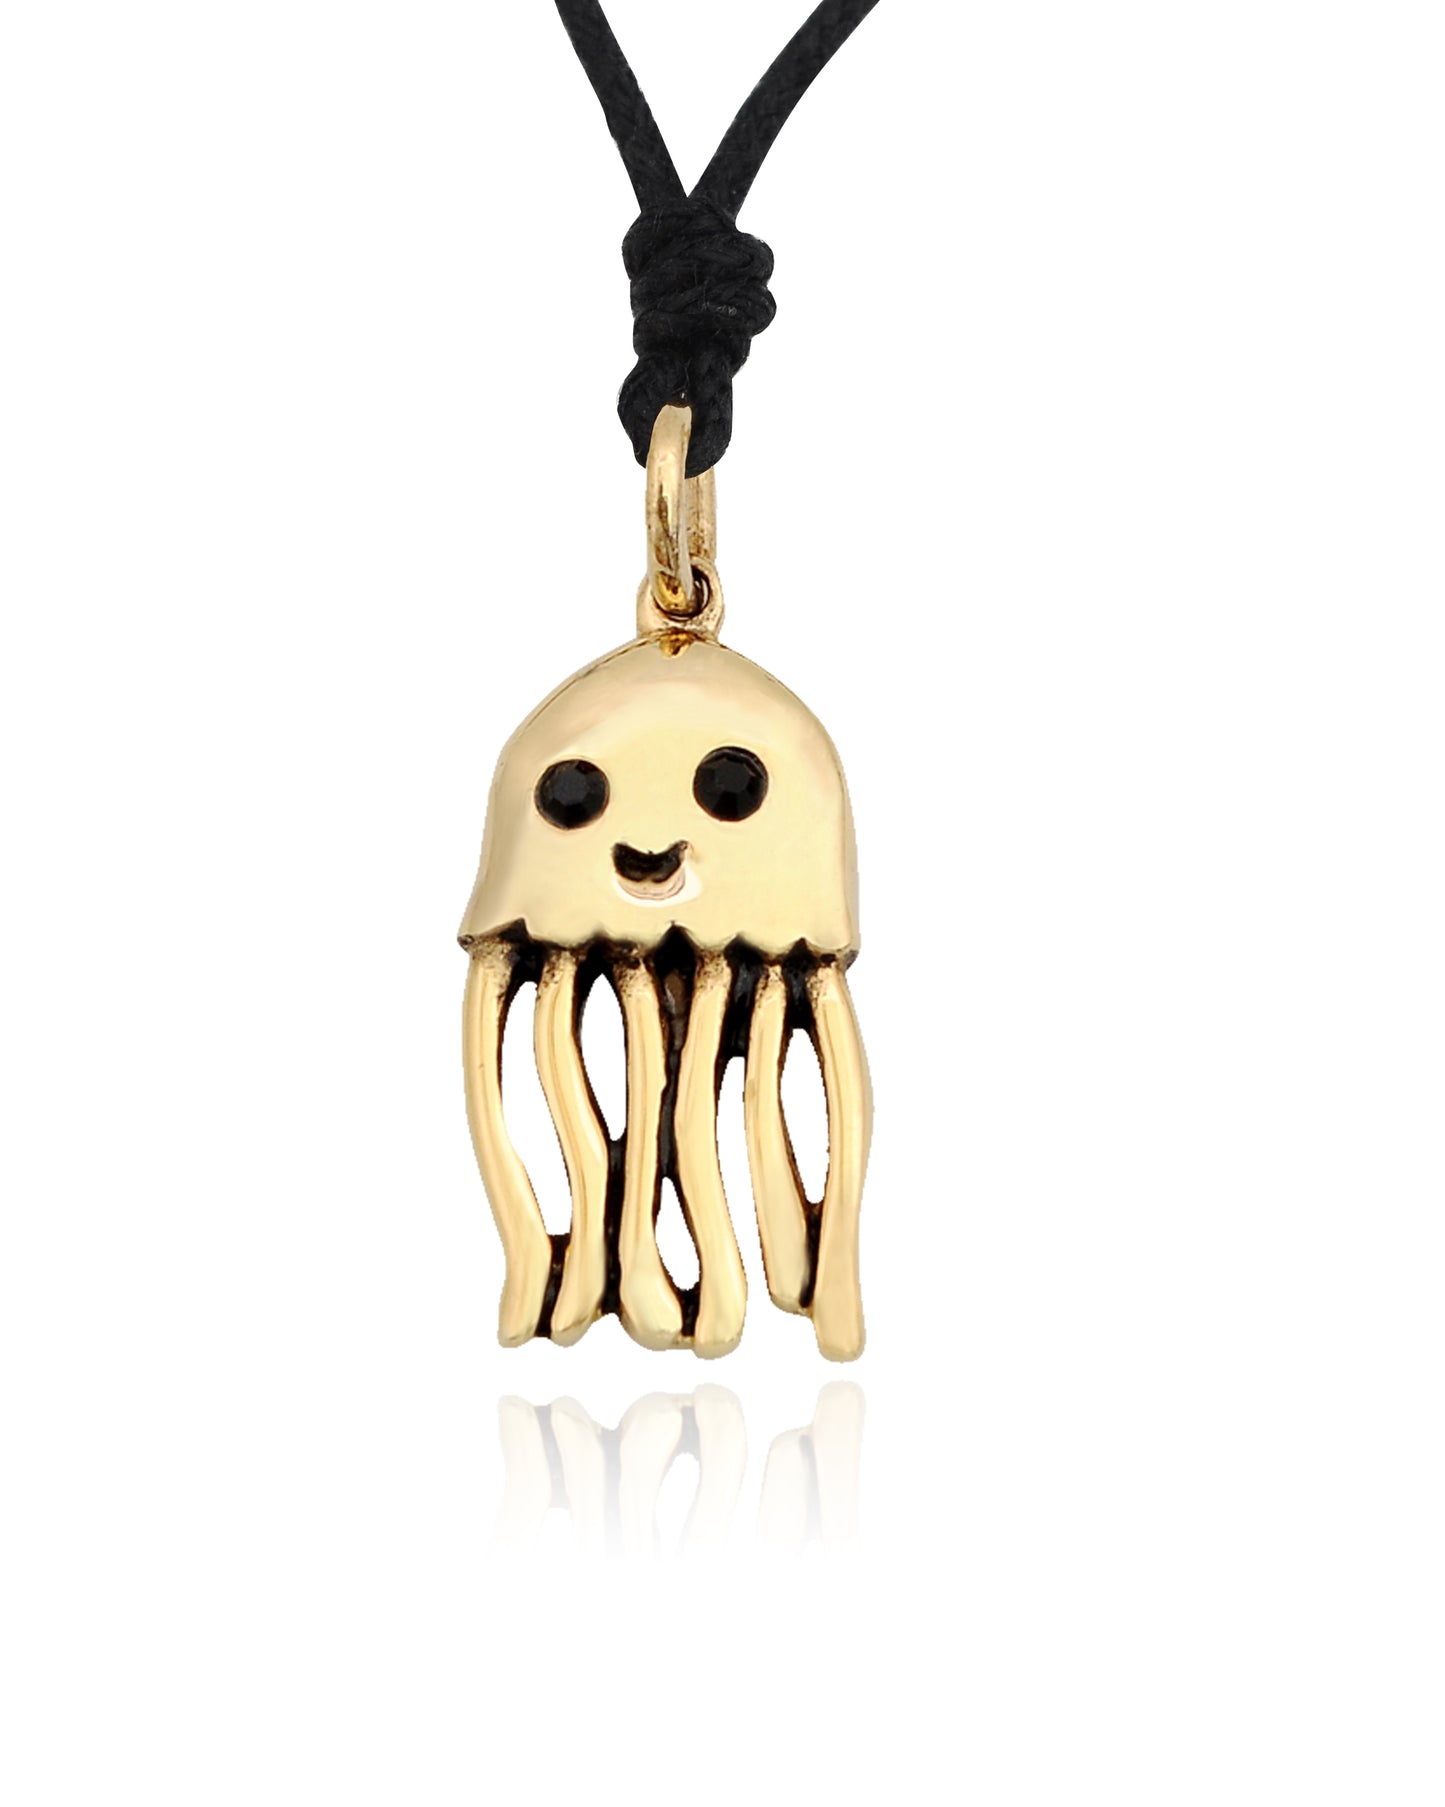 Cute Jelllyfish Handmade Brass Necklace Pendant Jewelry